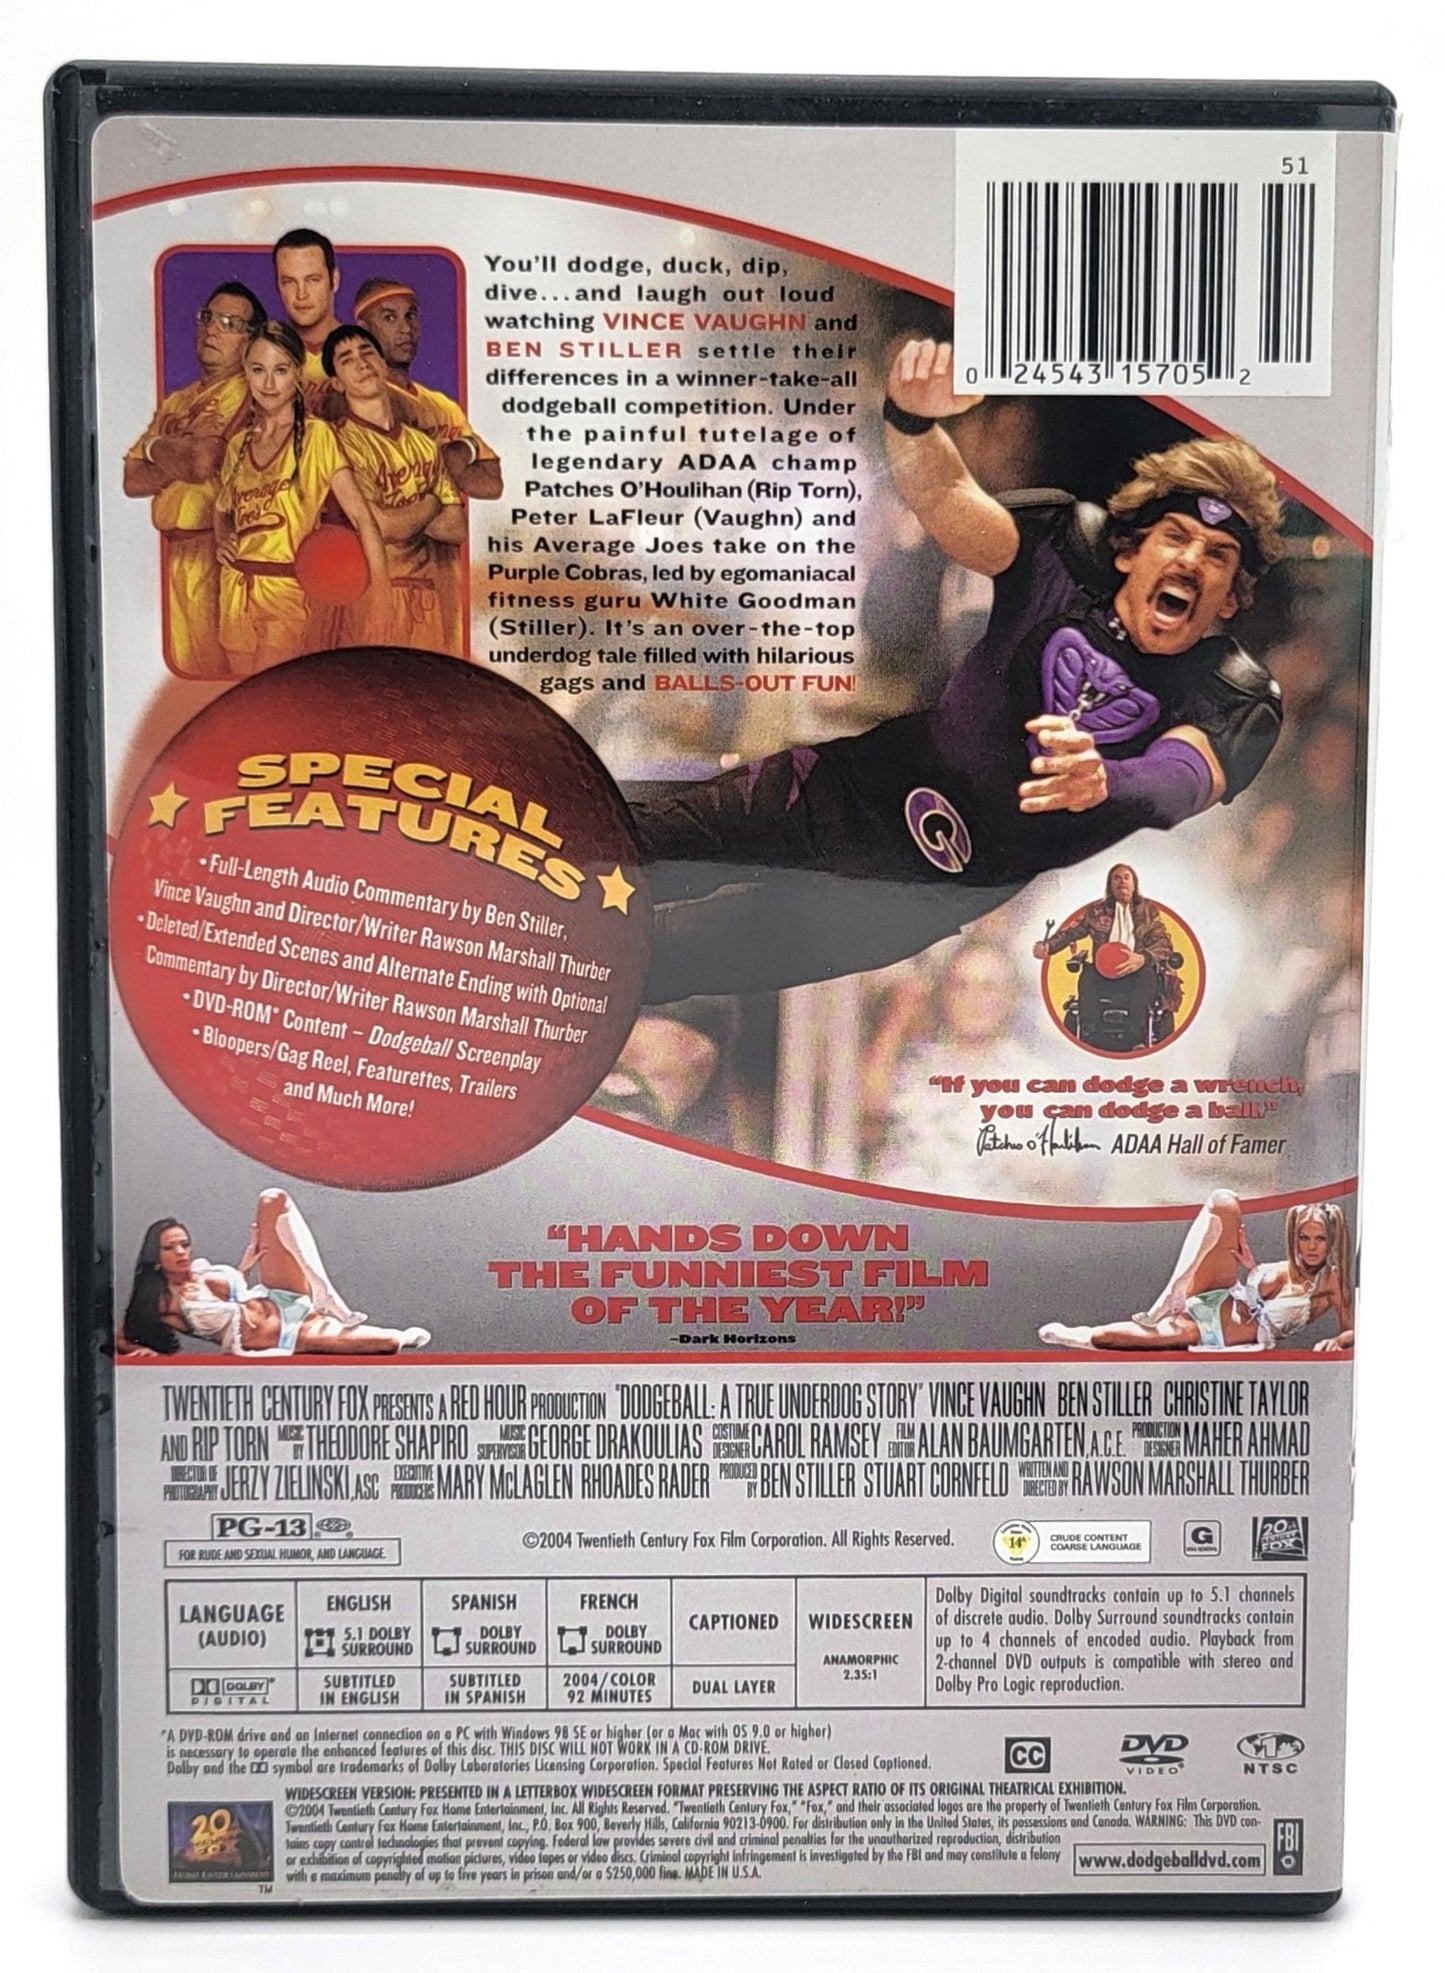 20th Century Fox - DodgeBall | DVD | Widescreen - DVD - Steady Bunny Shop